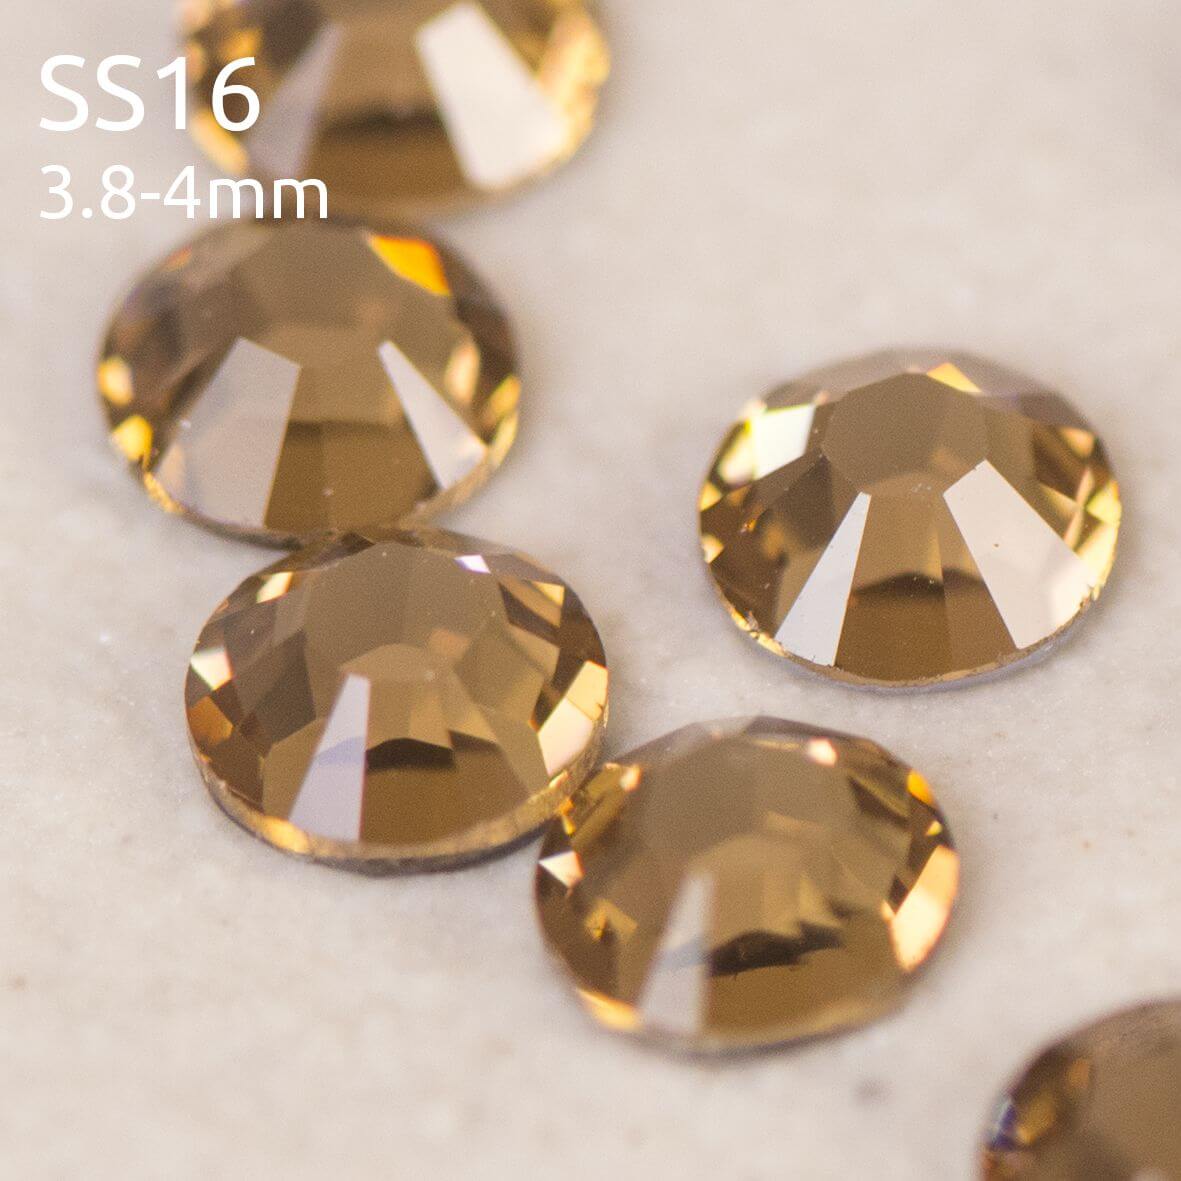 Swarovski Hot Fix SS16 Rhinestone Crystals category image